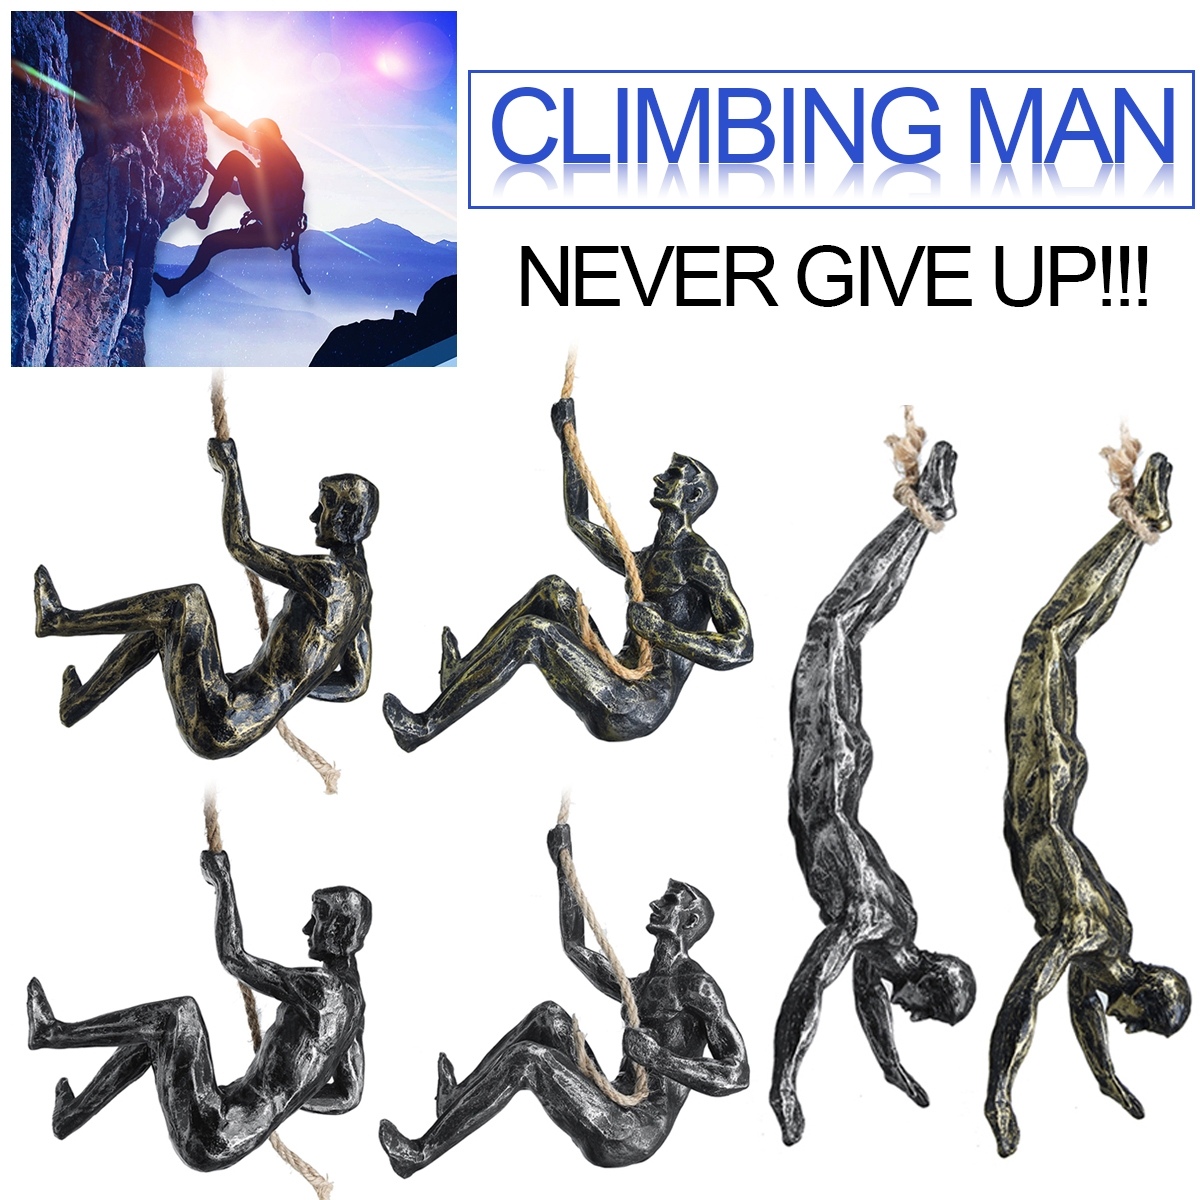 Handmade Global Climbing Iron Man Rope Wall Mounted Art Sculpture Climber Toys